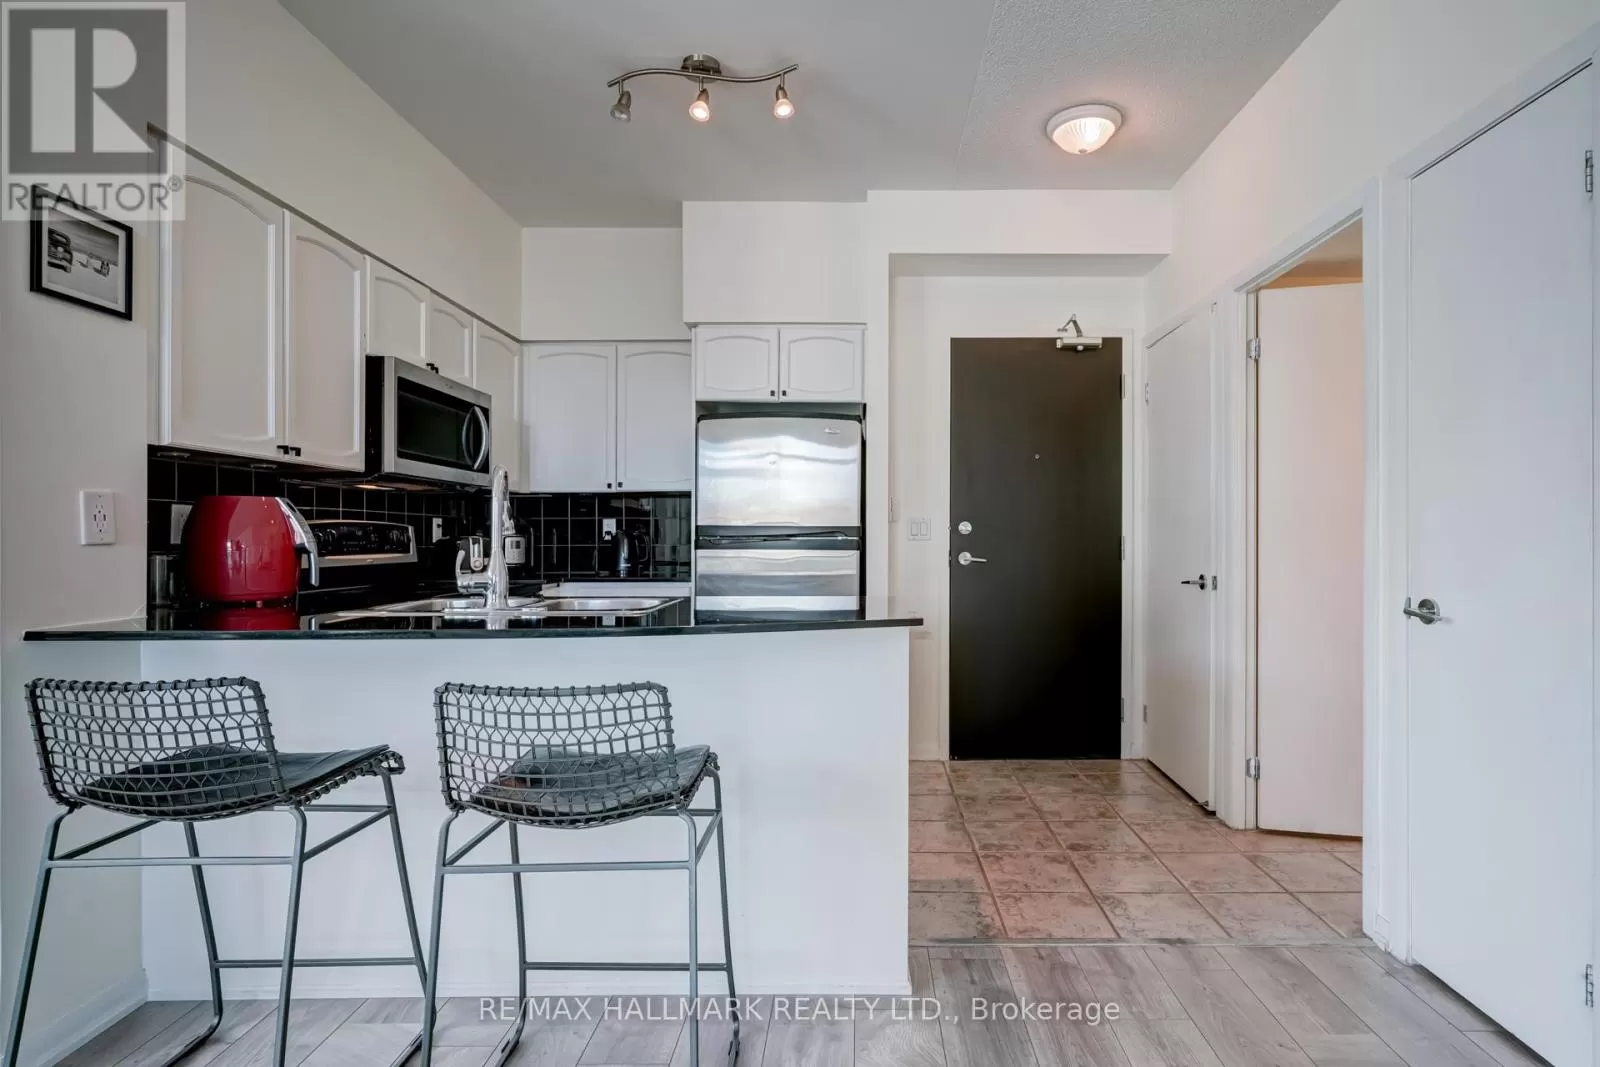 Apartment for rent: #230 -231 Fort York Blvd, Toronto, Ontario M5V 1B2